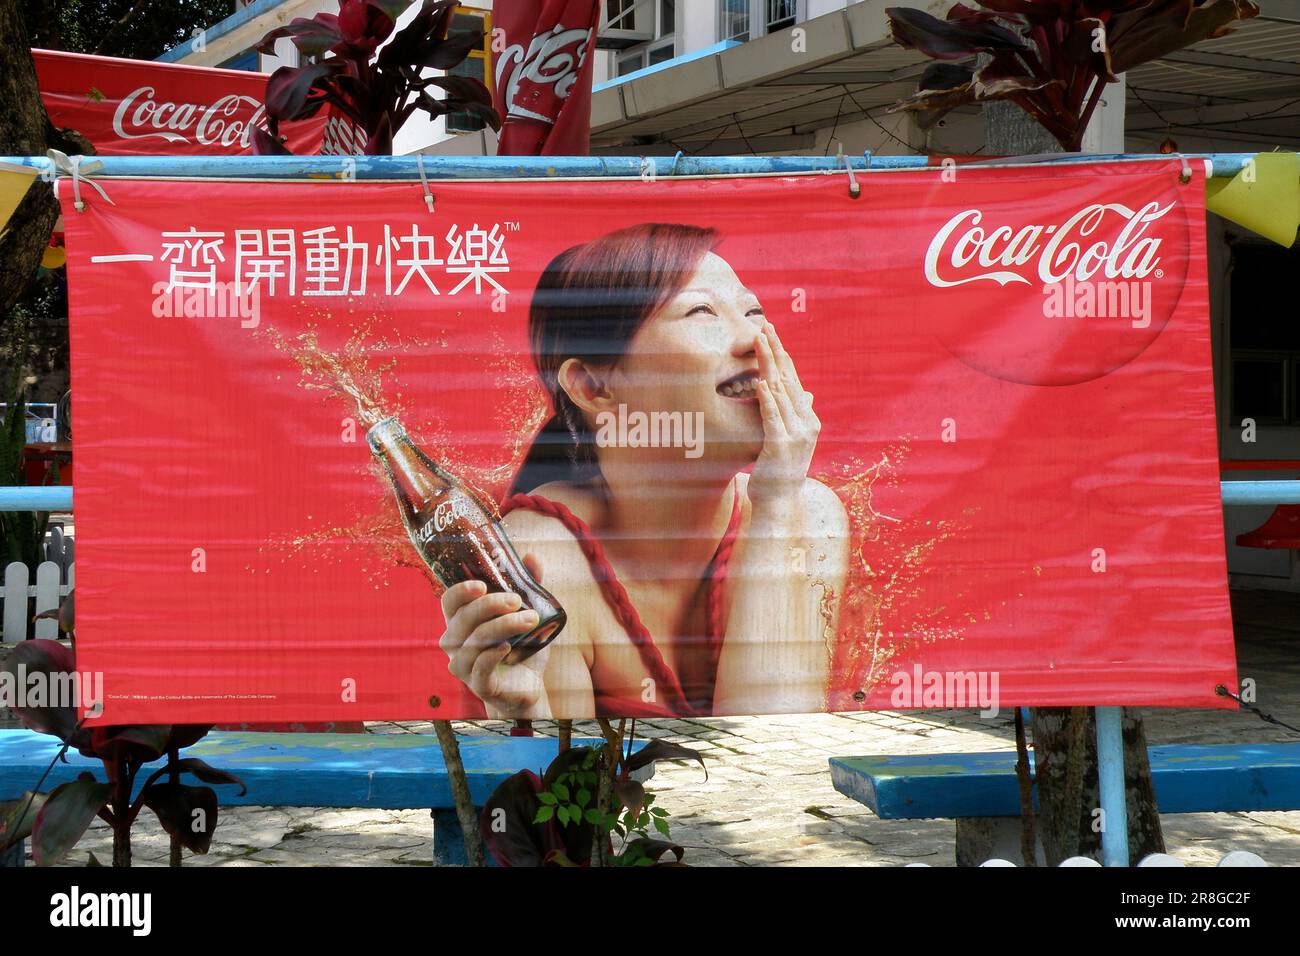 Coca Cola Adevertsing, Hong Kong, Chine Banque D'Images